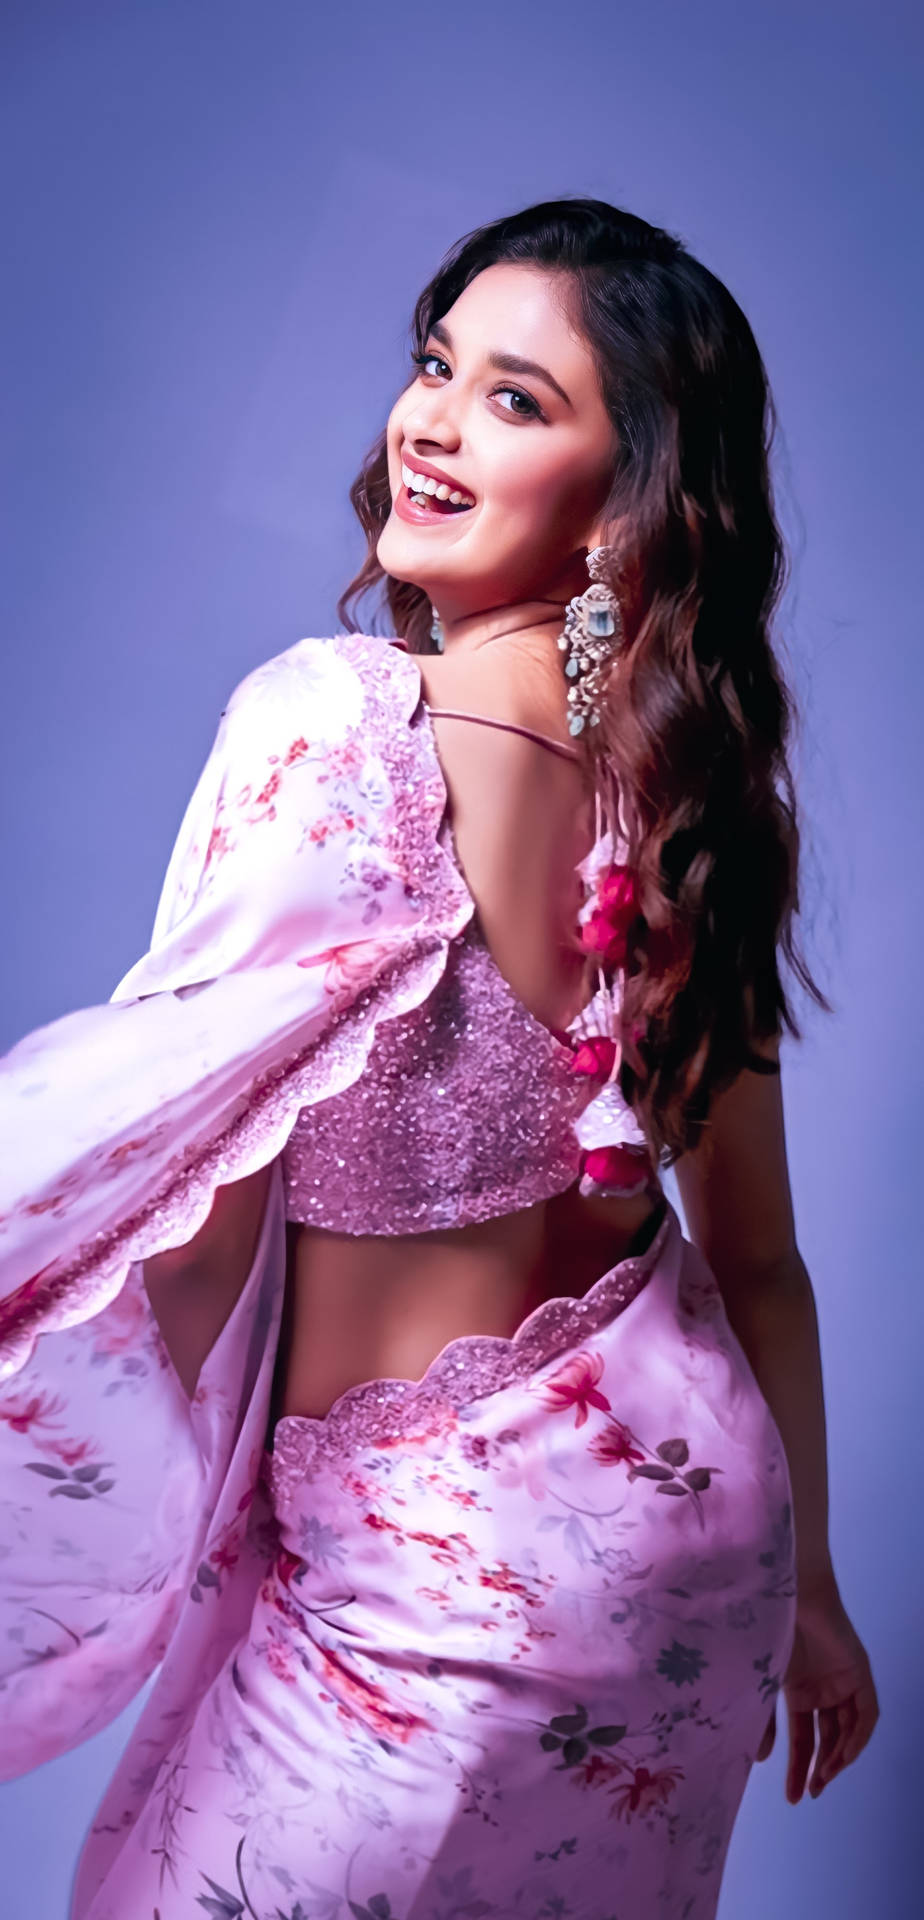 "South Indian Star Keerthi Suresh Radiating Elegance in a Lavender Saree" Wallpaper